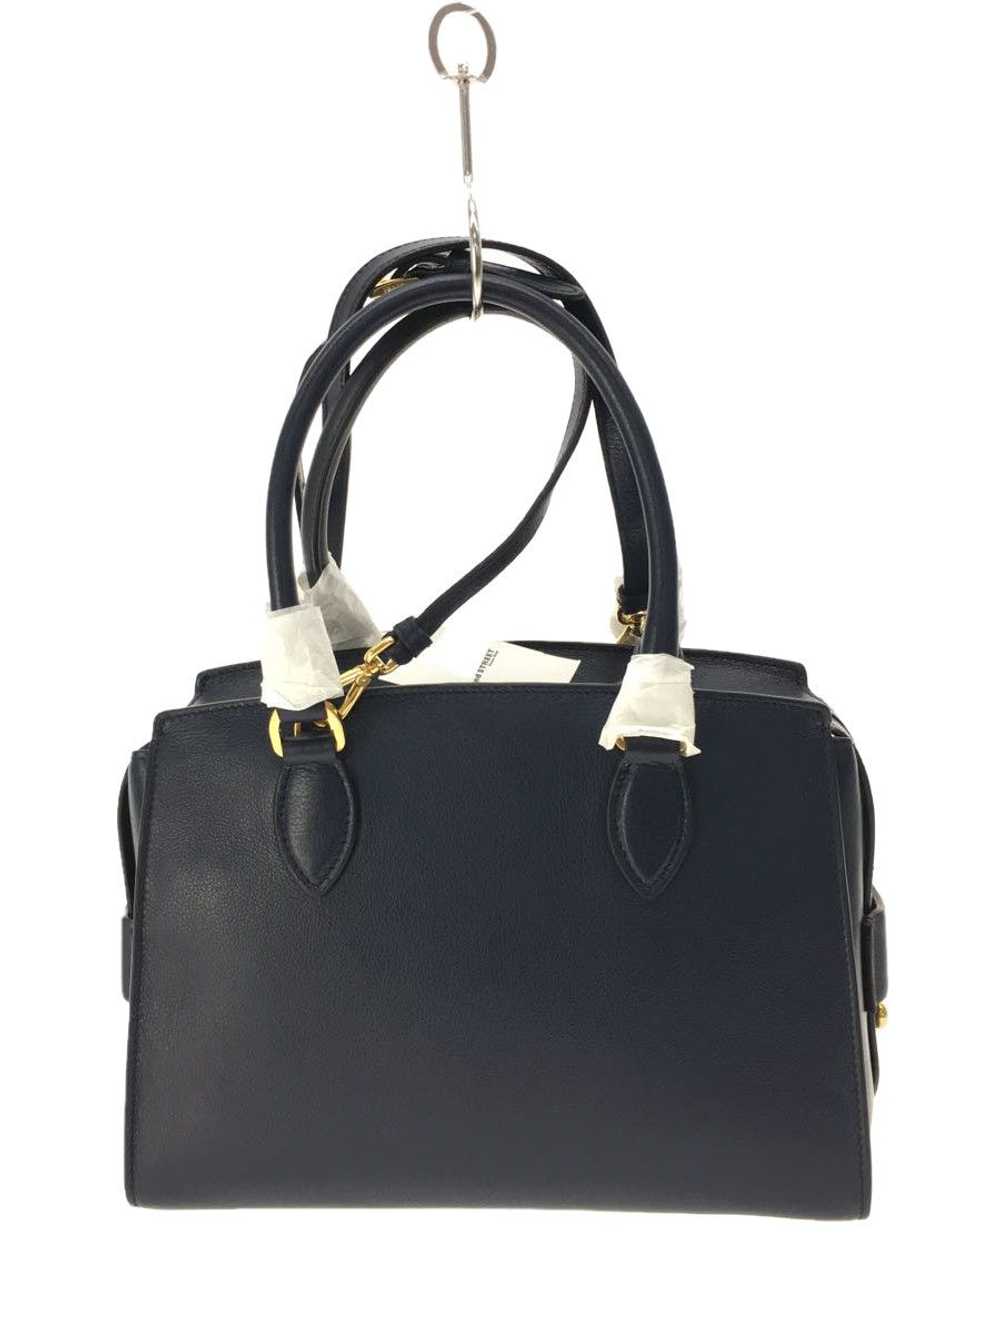 Prada Prada Shoulder Bag Leather Handbag Navy - image 2